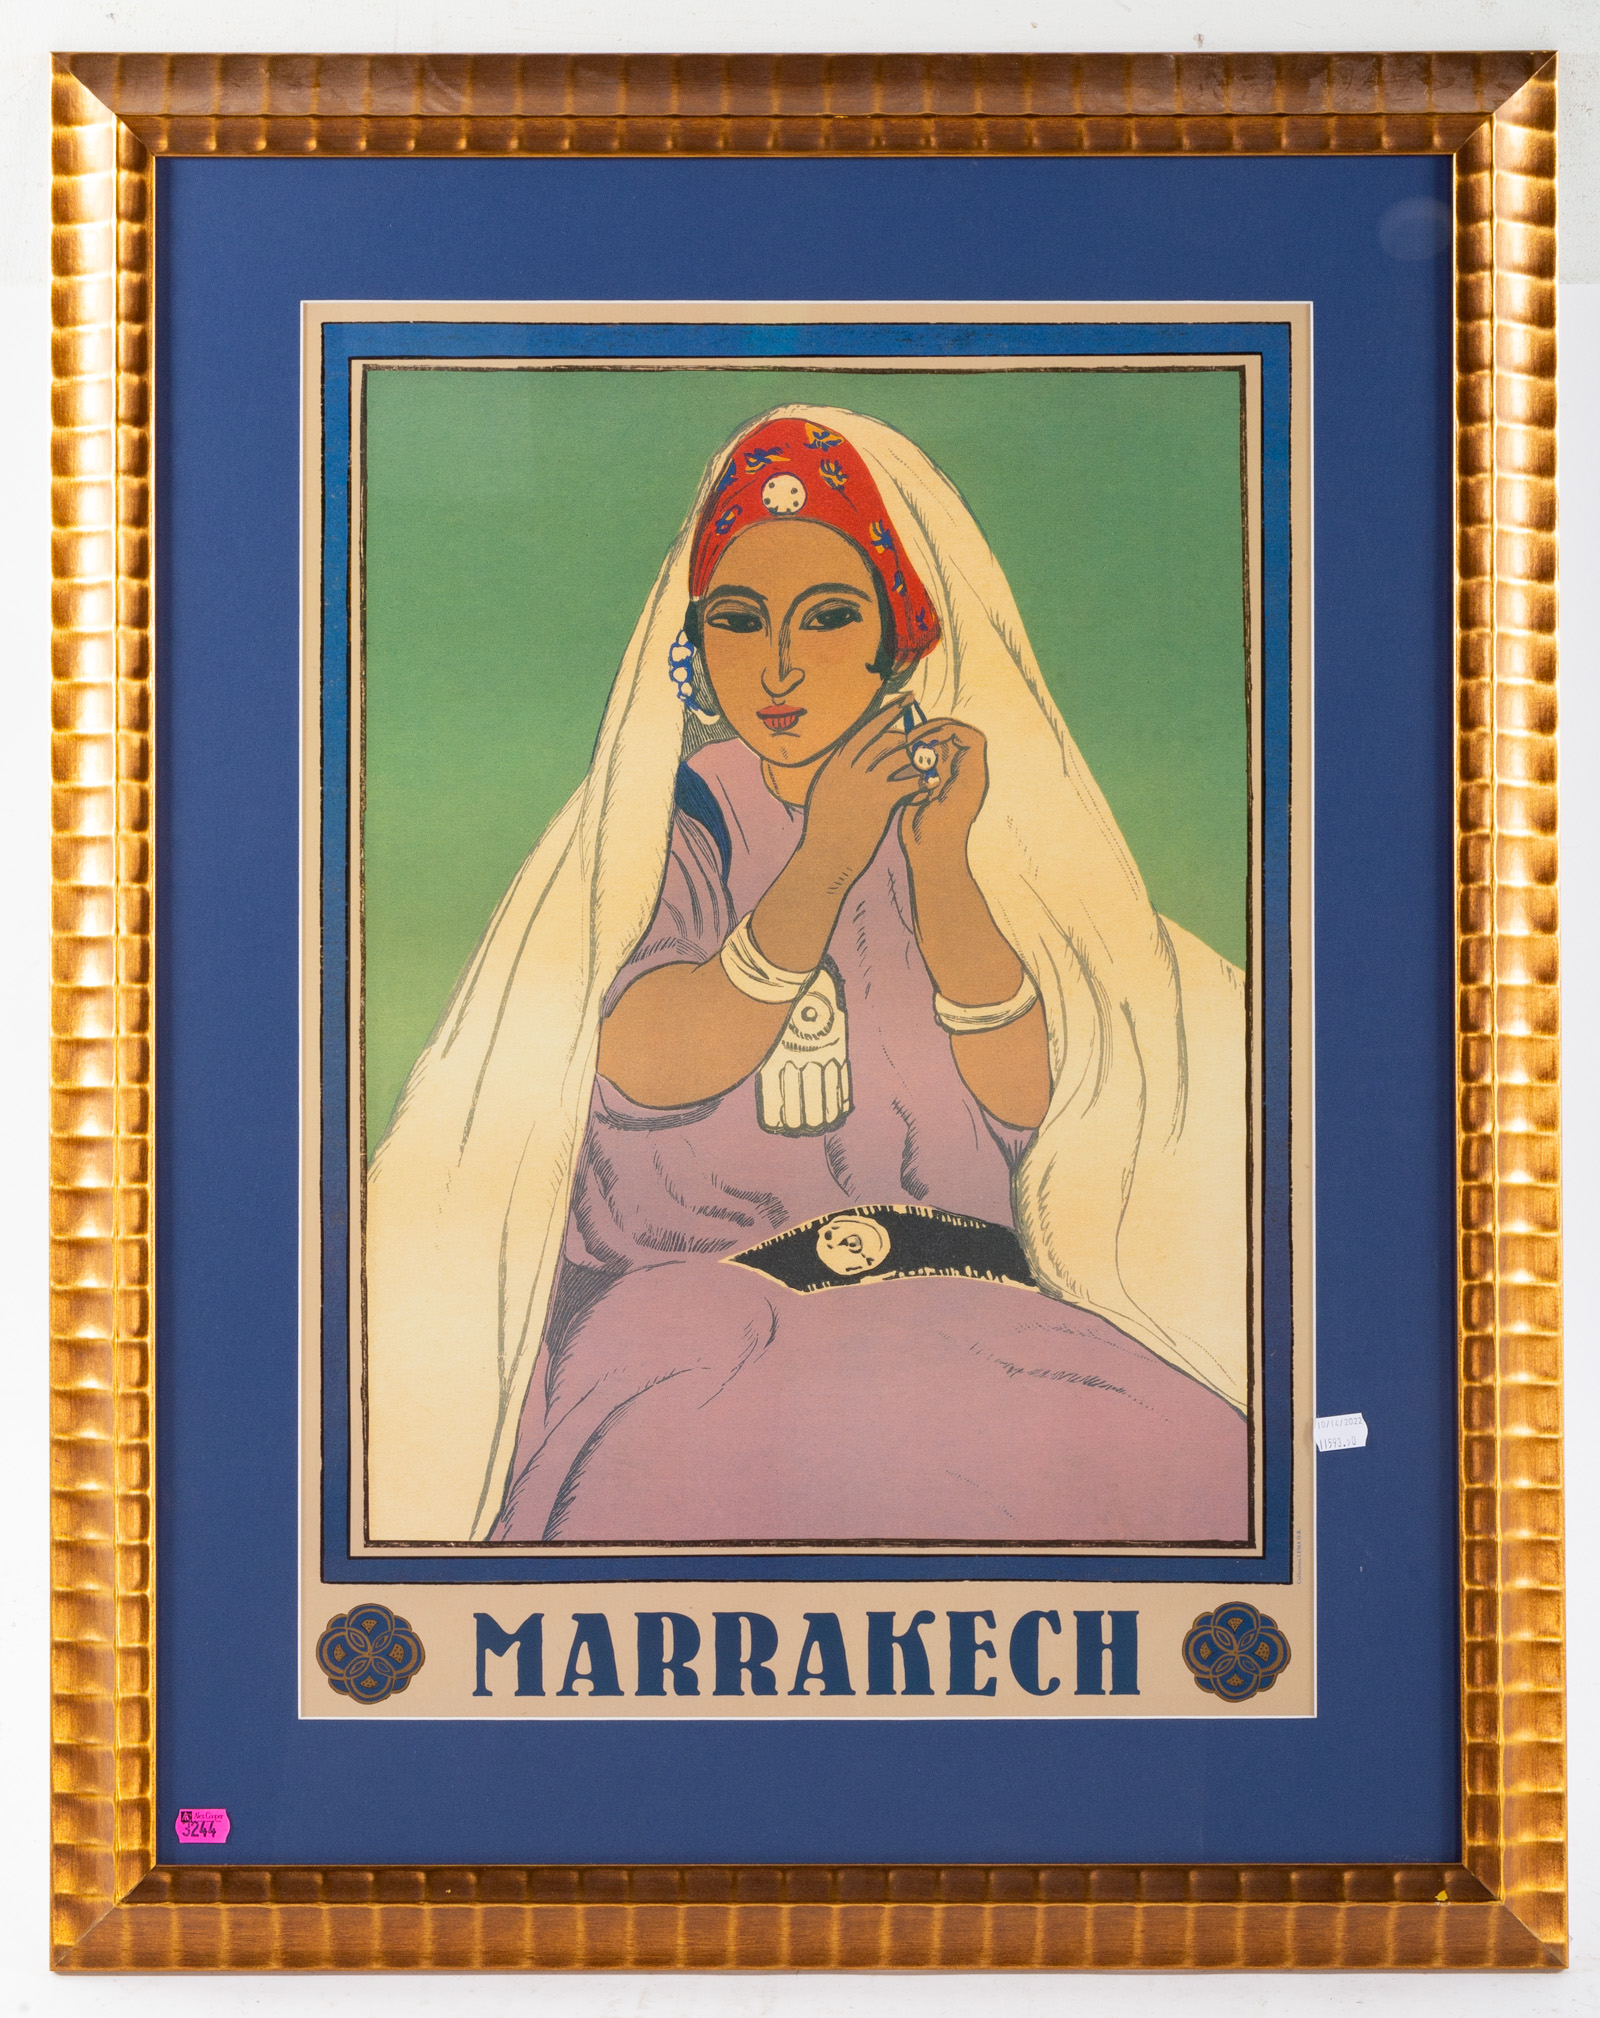 MARRAKECH COLOR POSTER Color poster  2e8e4f